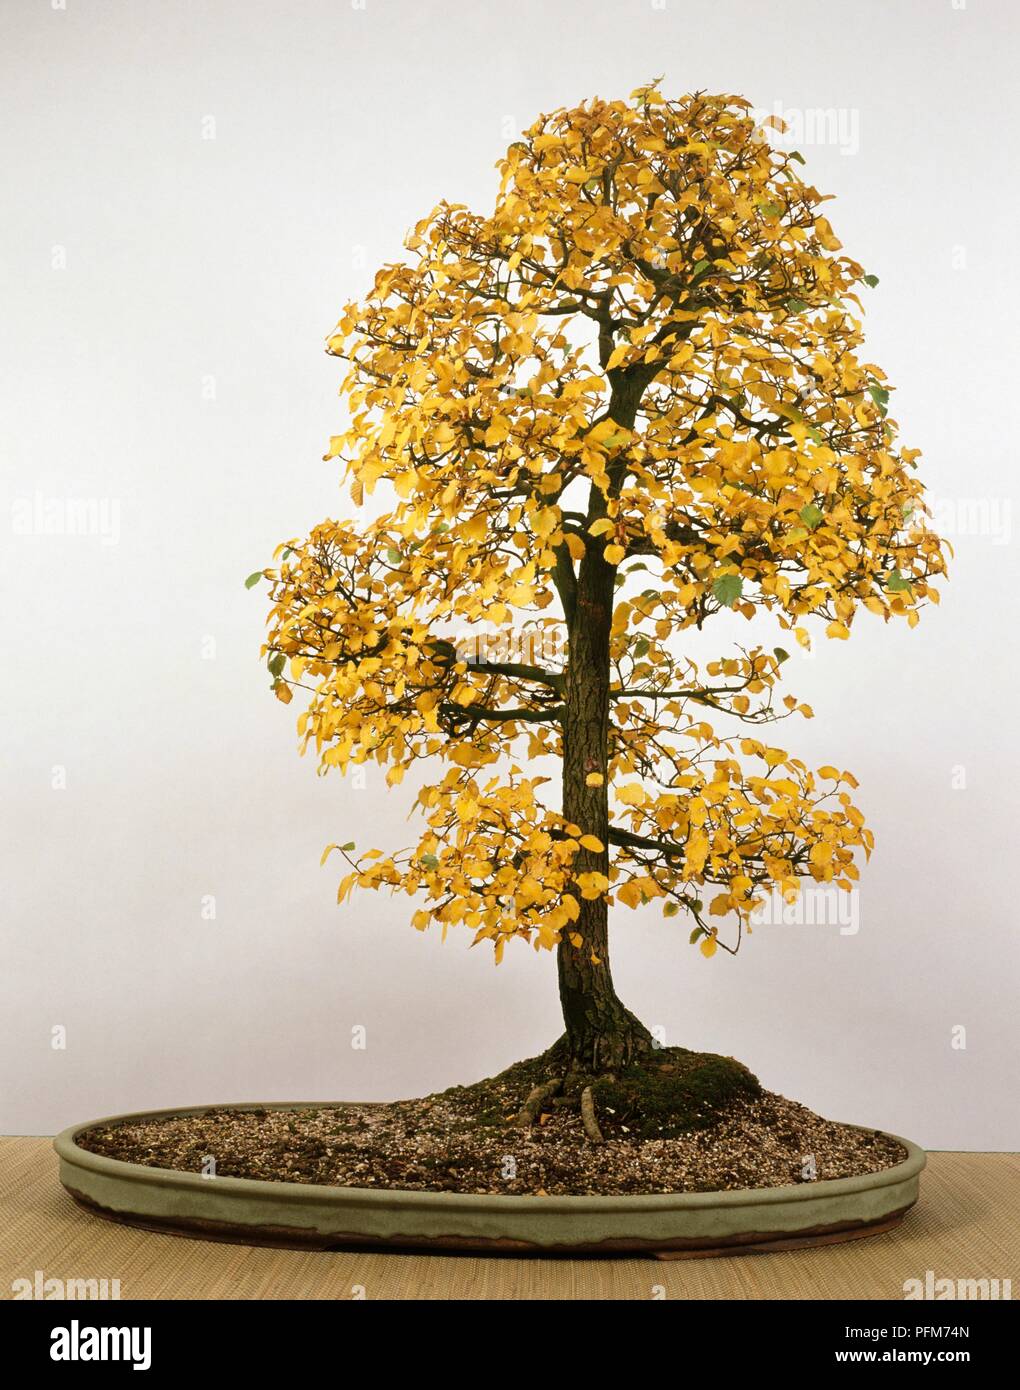 Ulmus procera (English elm), bonsai tree with yellow foliage Stock Photo